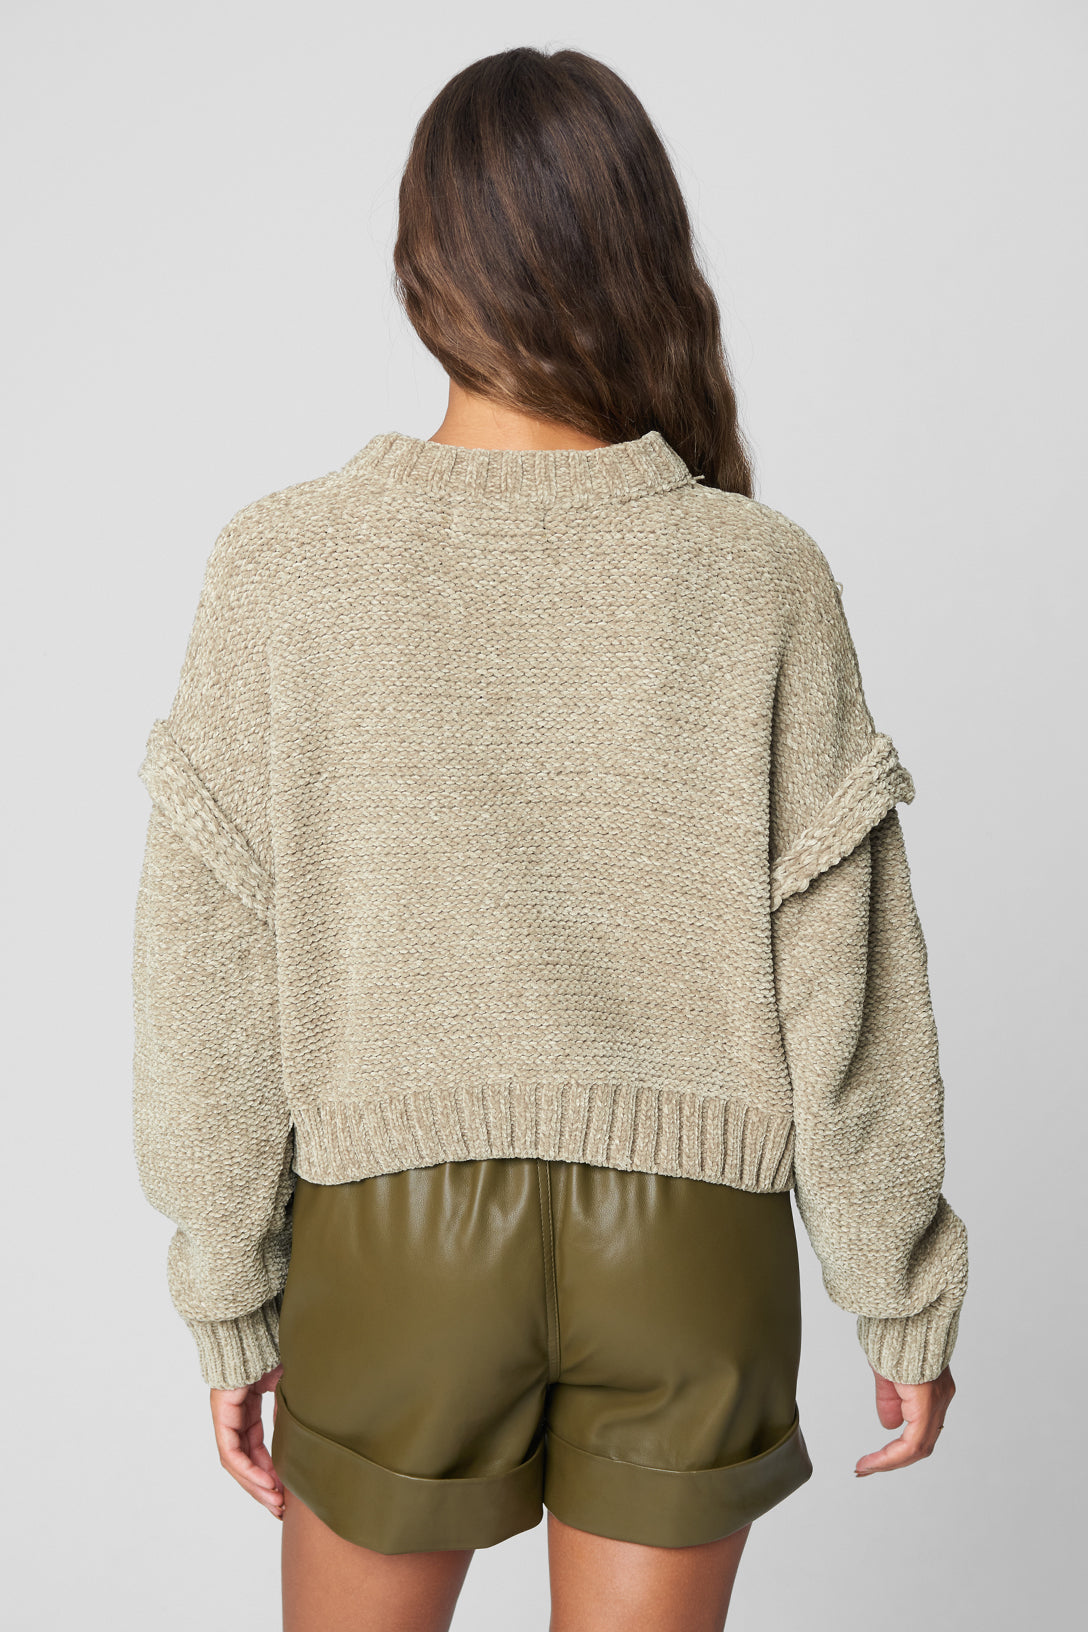 Highlight Reel Sweater